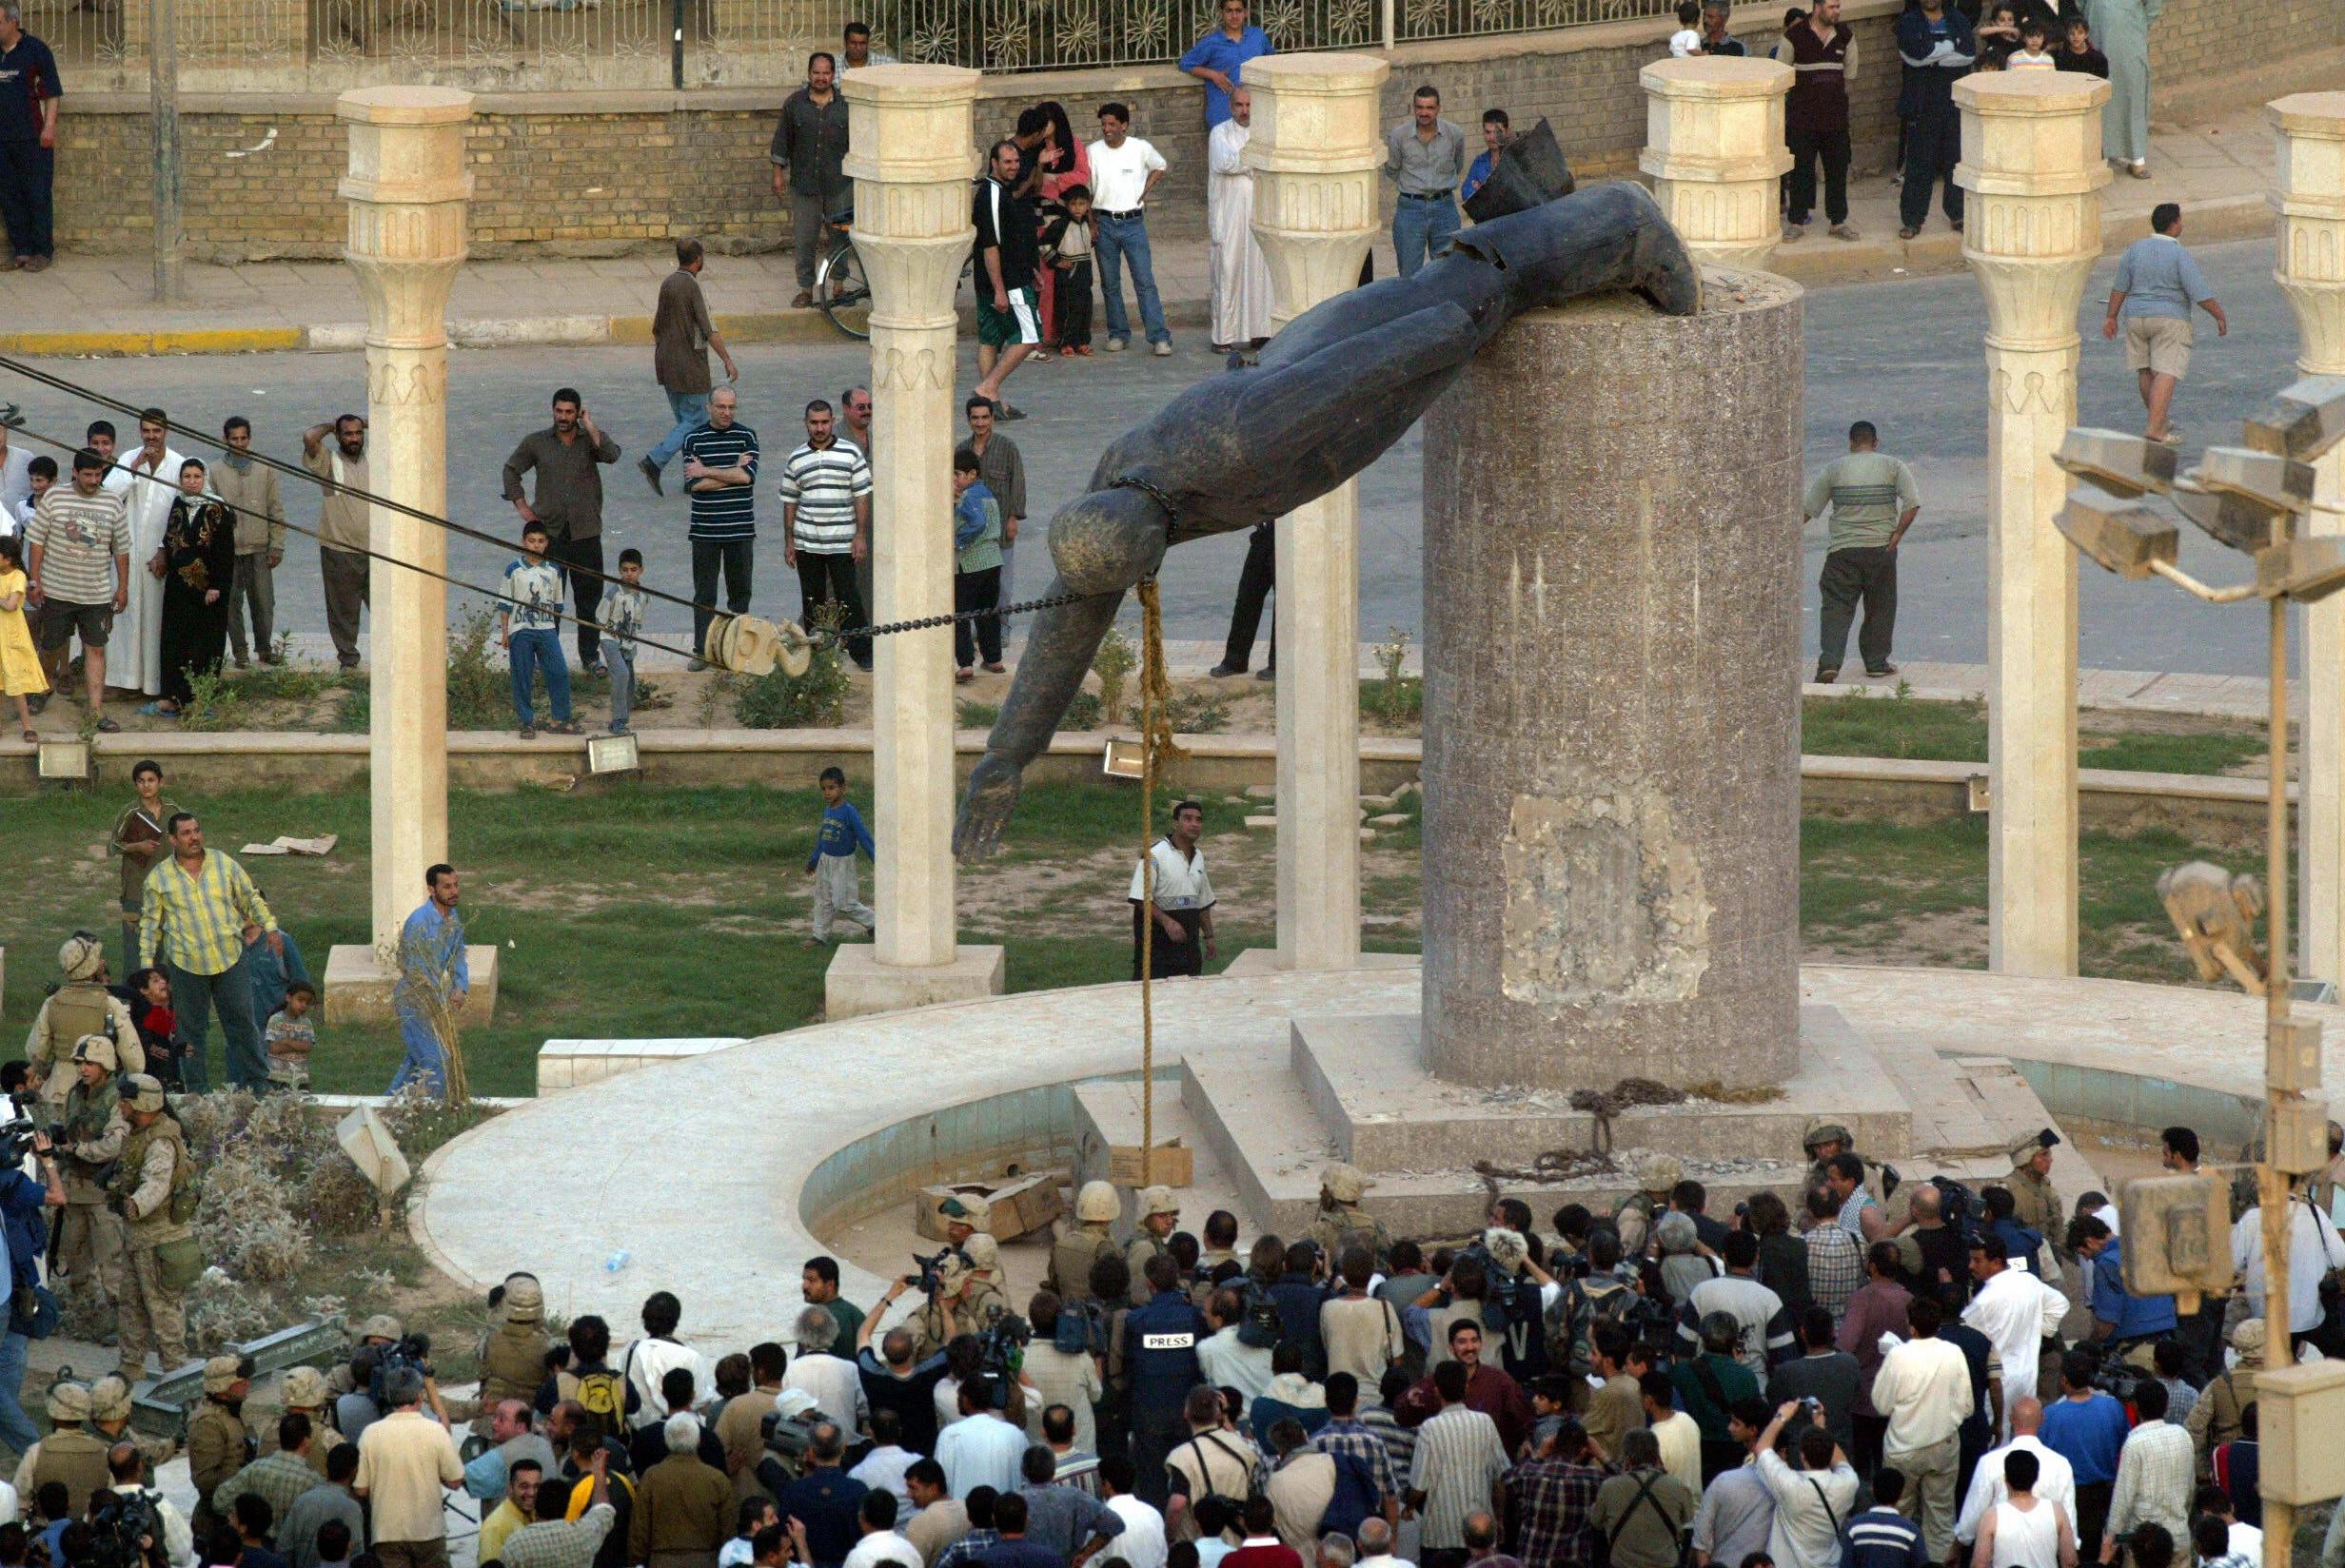 The statue of Saddam Hussein falls in Baghdad’s Fardus square